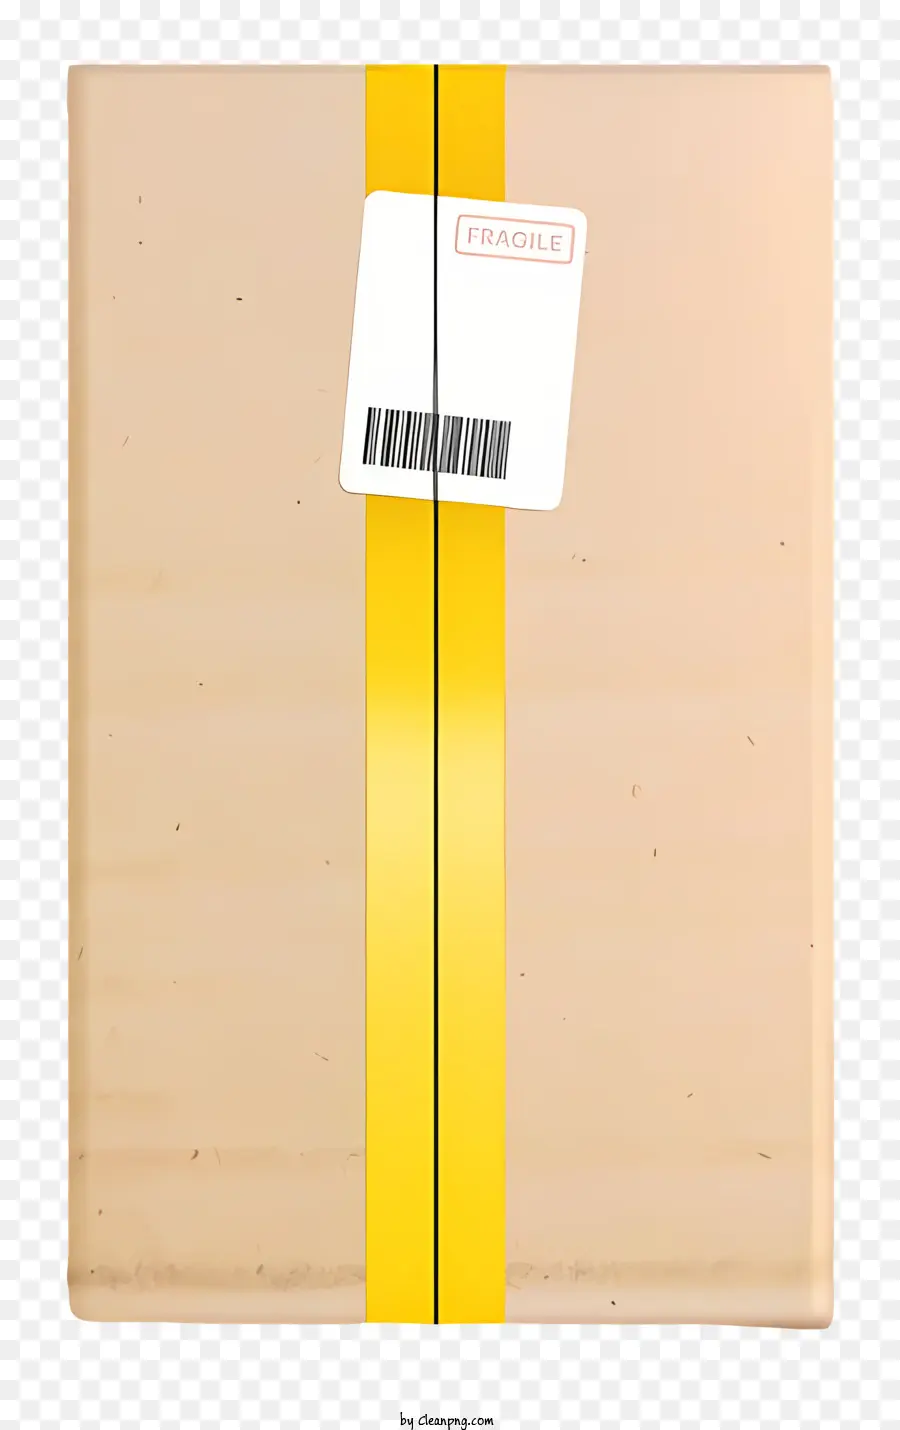 Karton - Gelbe Versandetikett an Brown Box angeschlossen